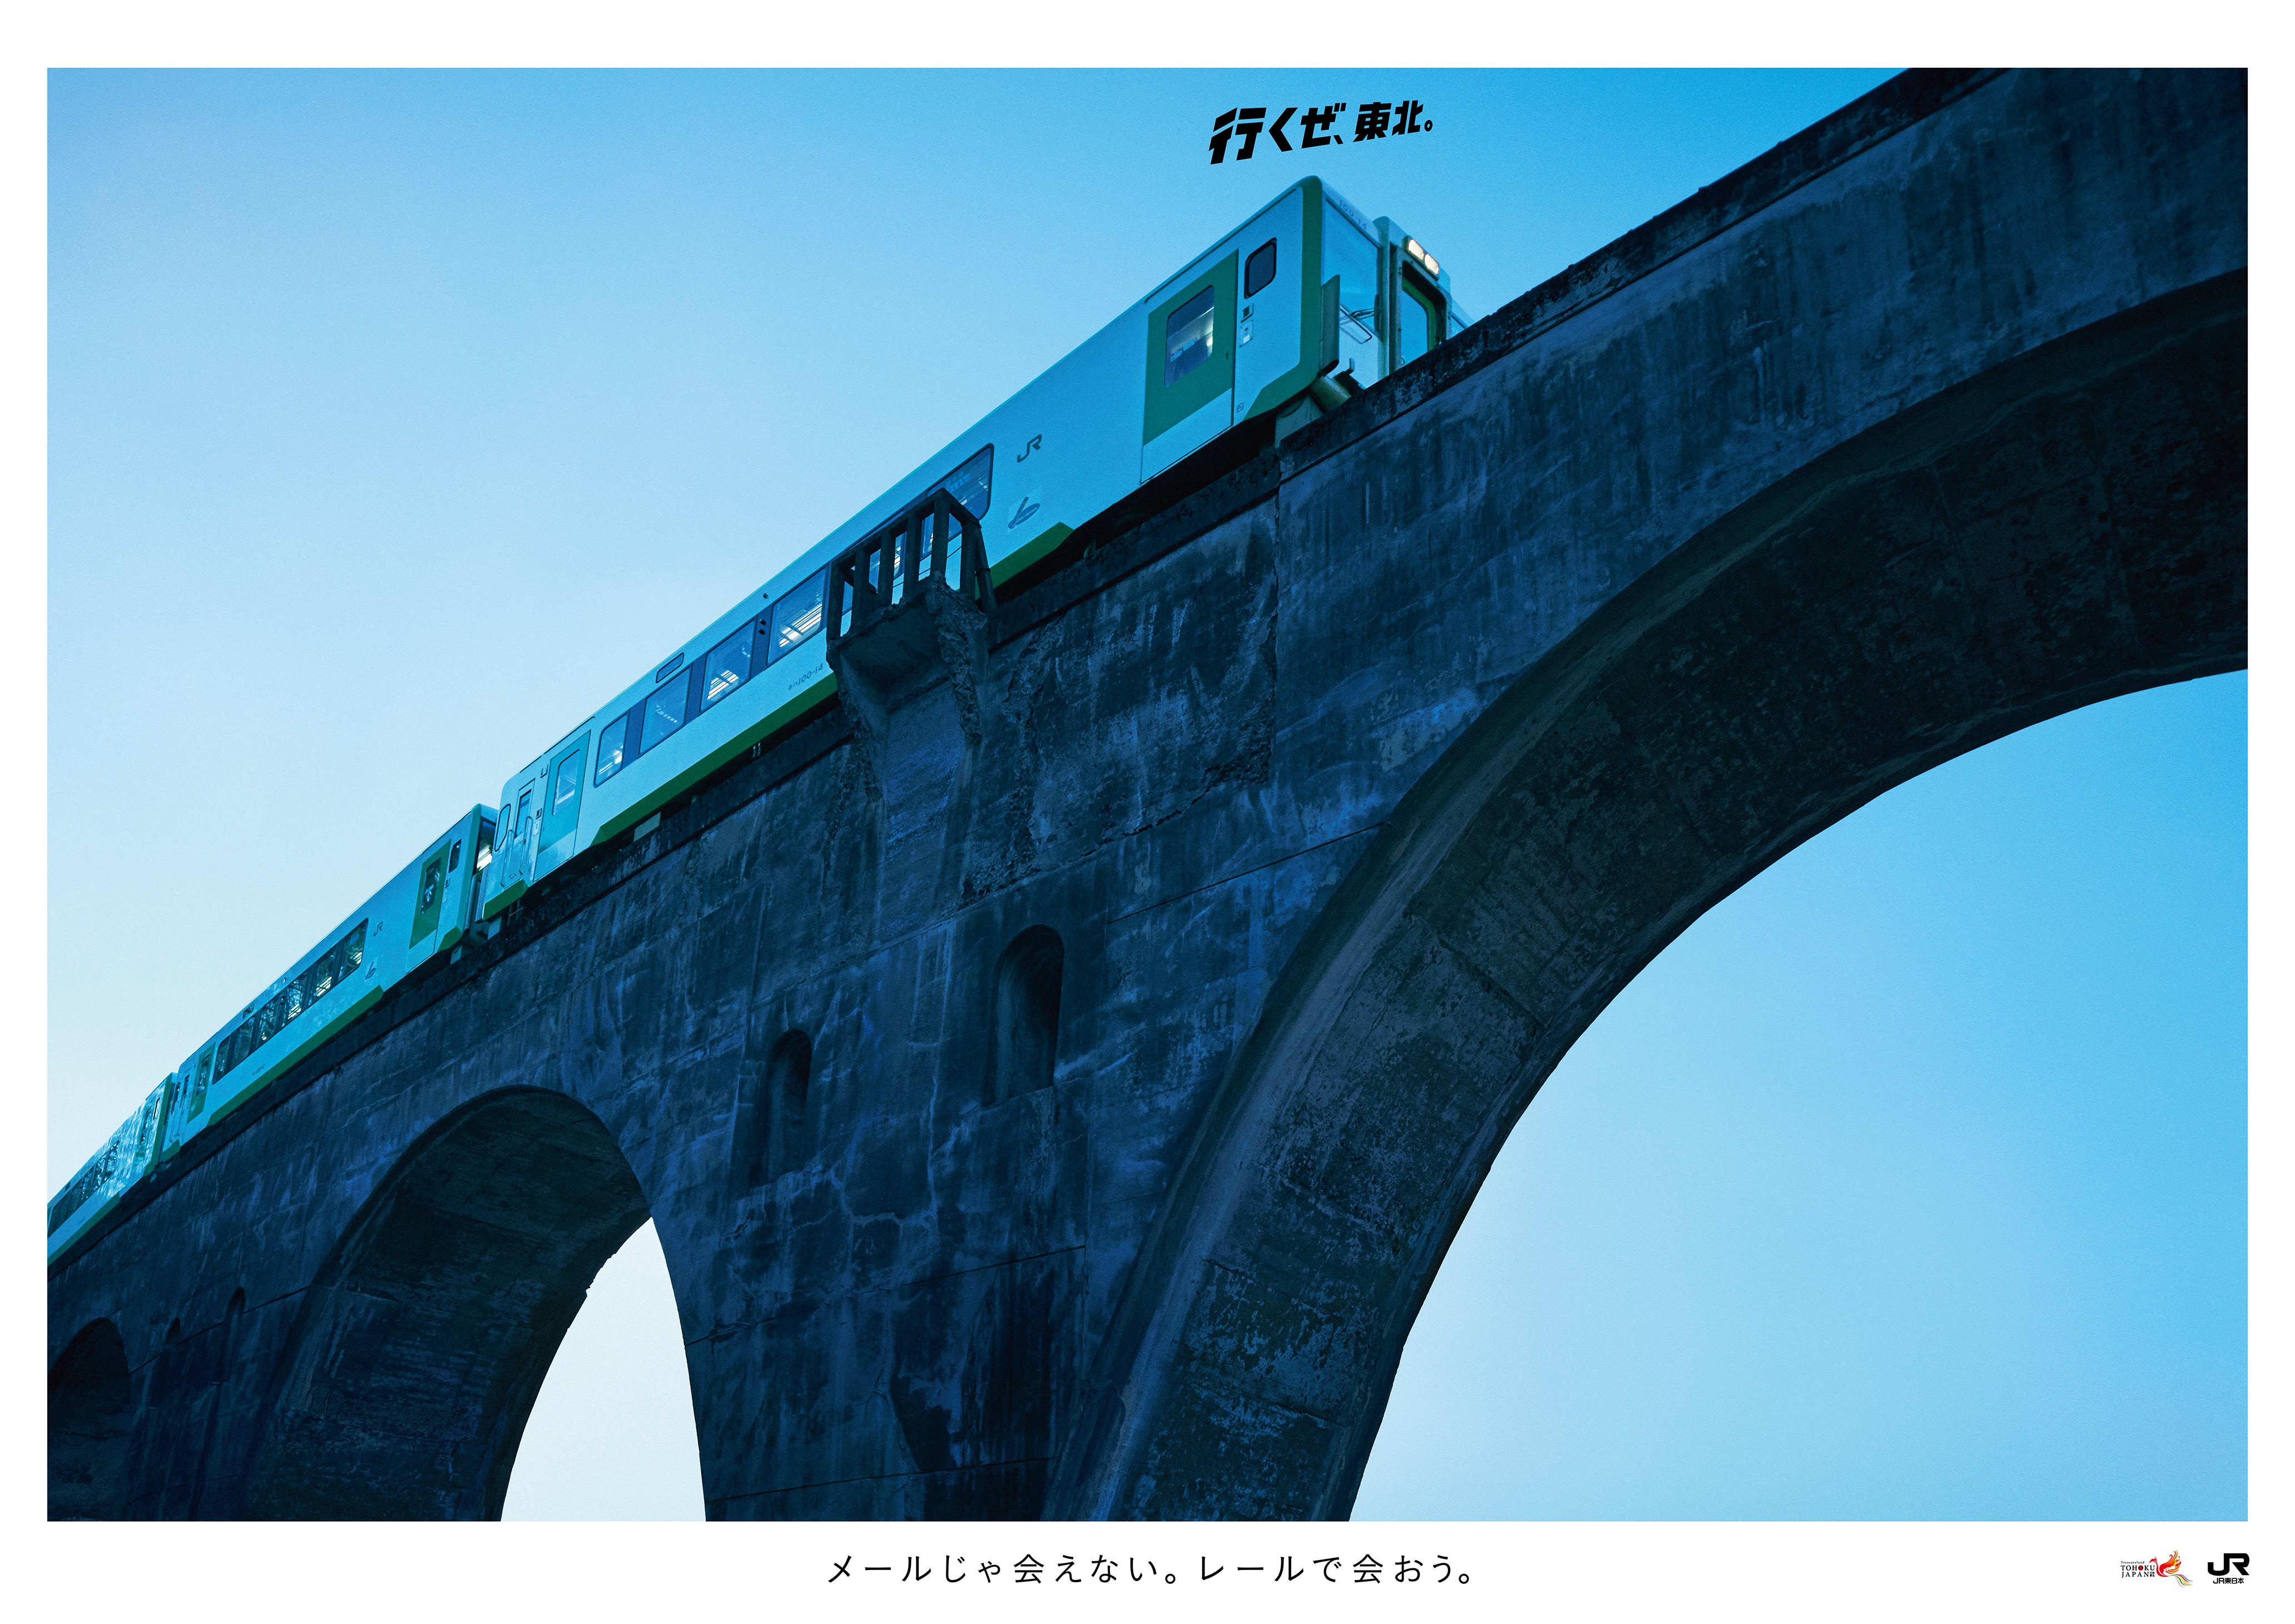 JR_ikuze_2016_spring_B0_train_160309_fin_ol